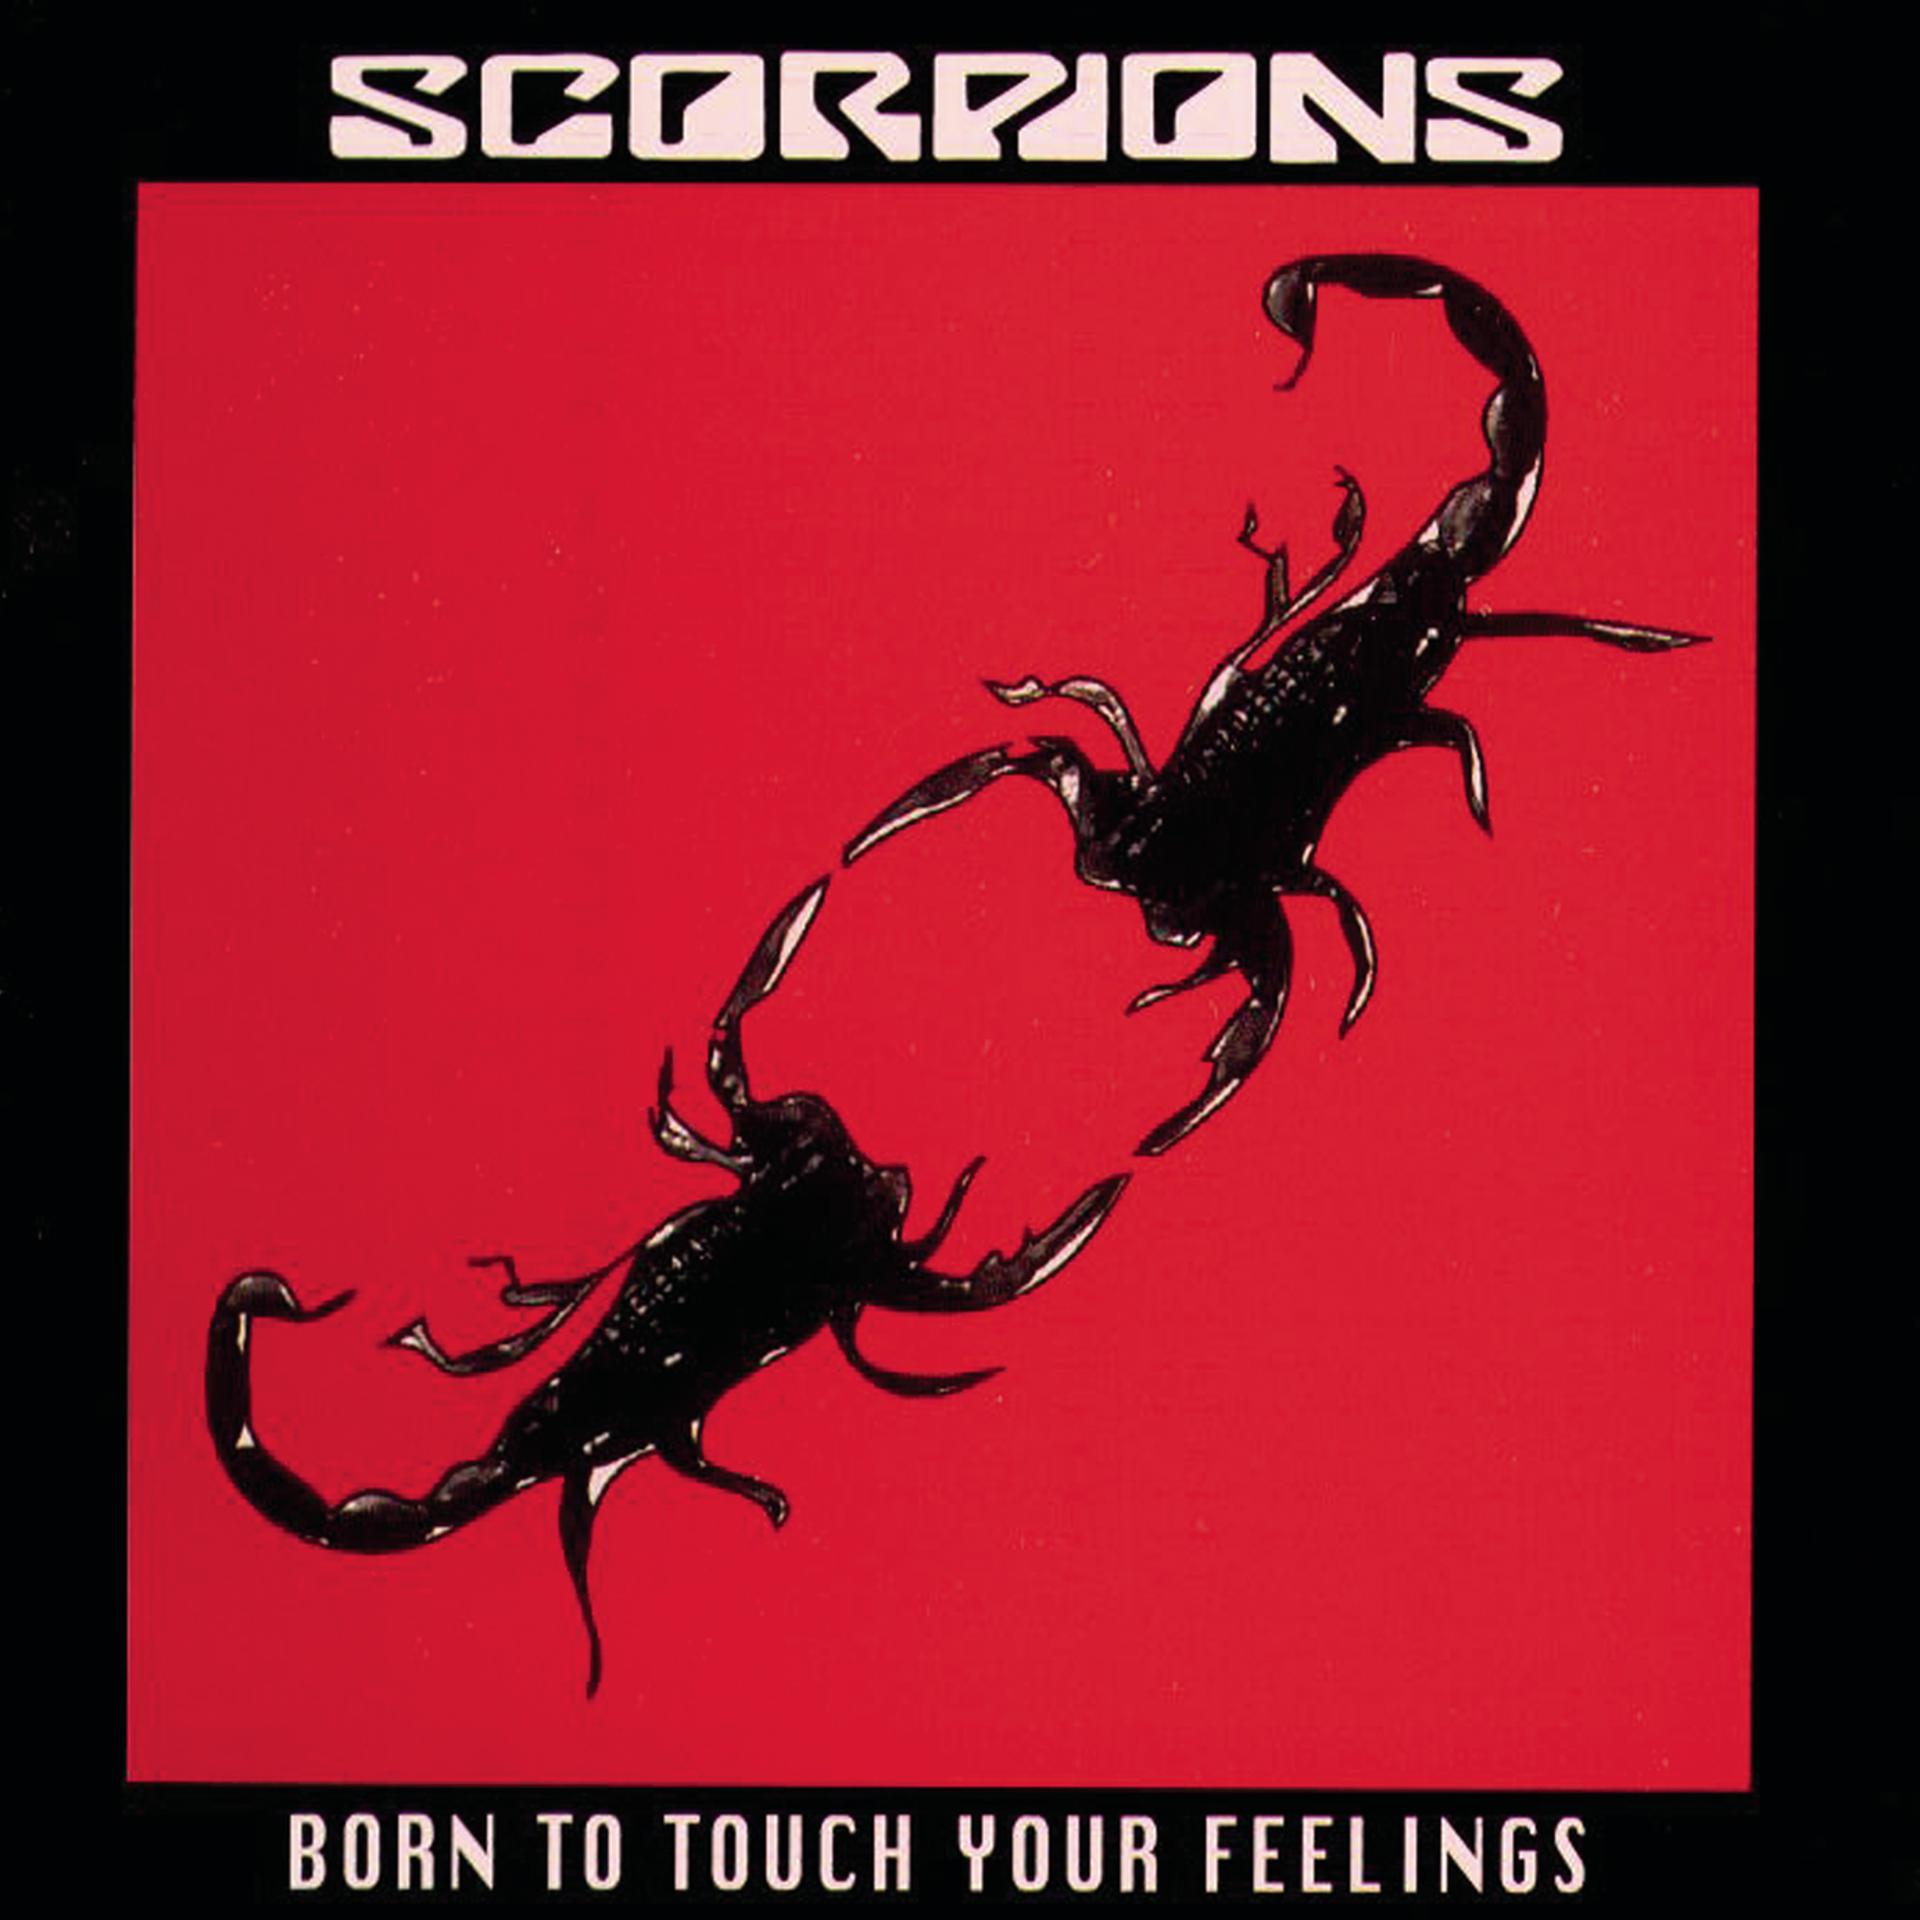 Scorpions games